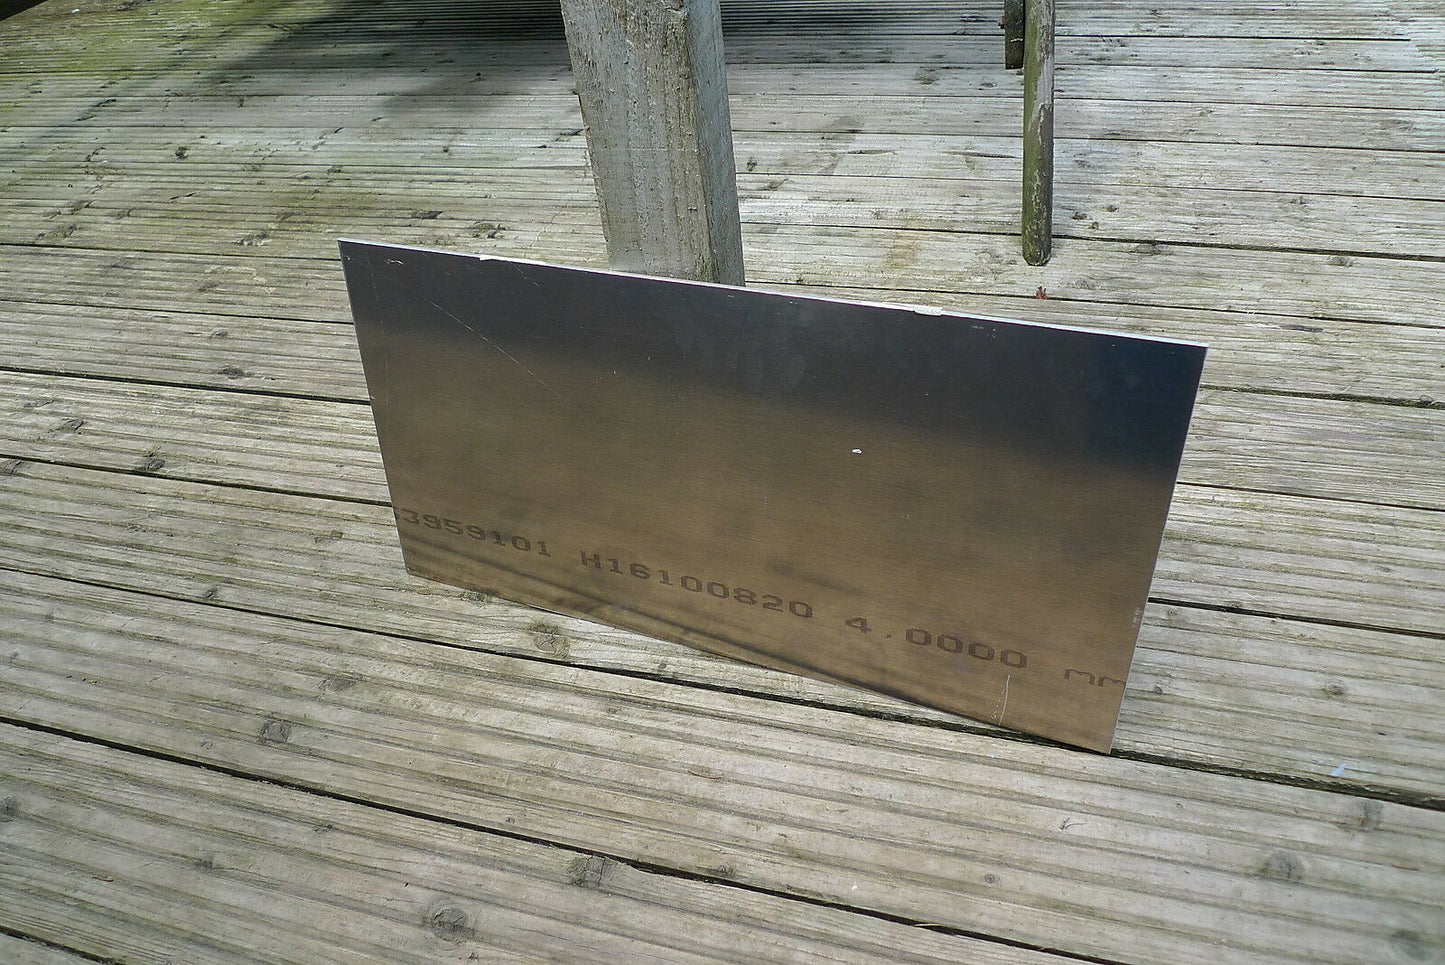 Aluminium Alloy Plate / Sheet Metal - Marine 5083 Grade - 590mm x 300mm x 4mm